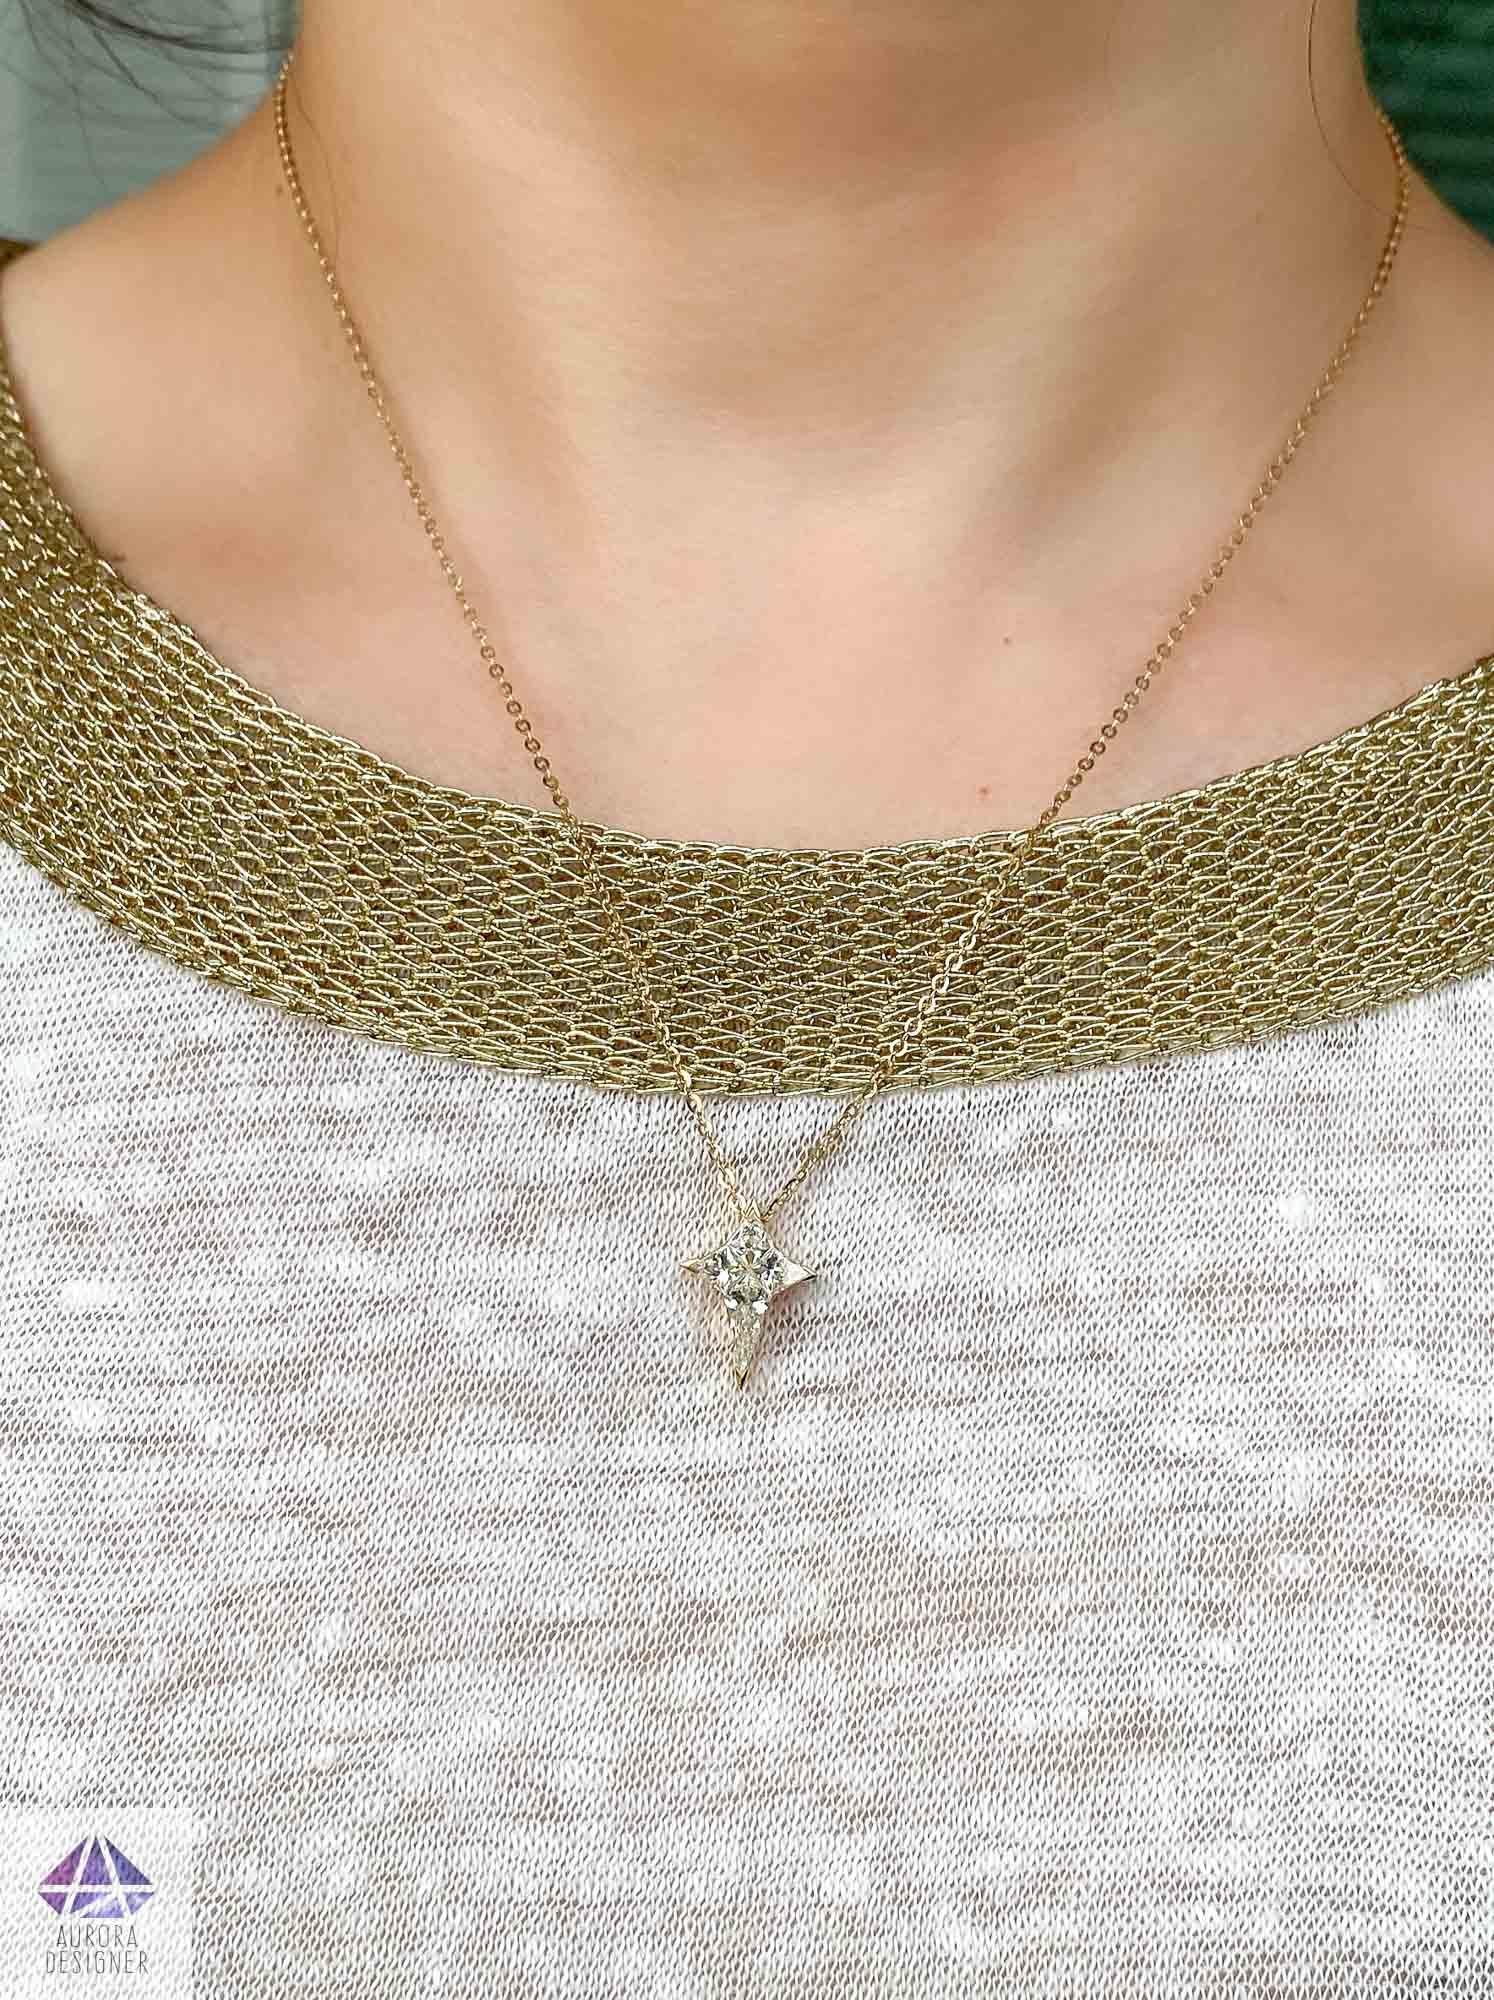 Women's or Men's Diamond Star 18k Yellow Gold Pendant Necklace Invisible Setting Unique AD1922v1